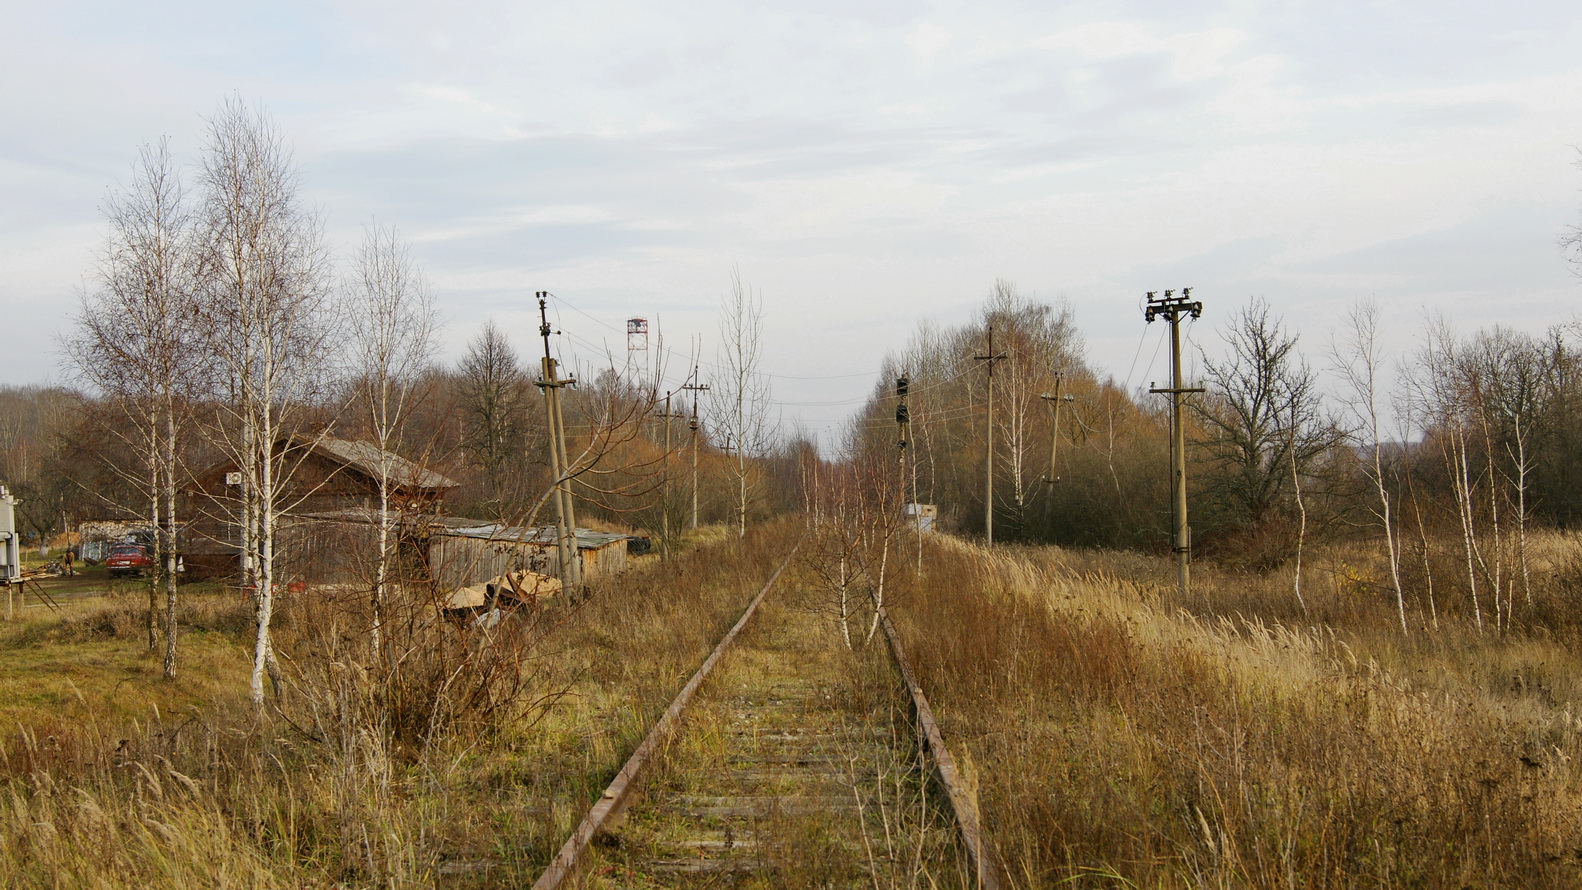 Moscow Railway — Stations & ways